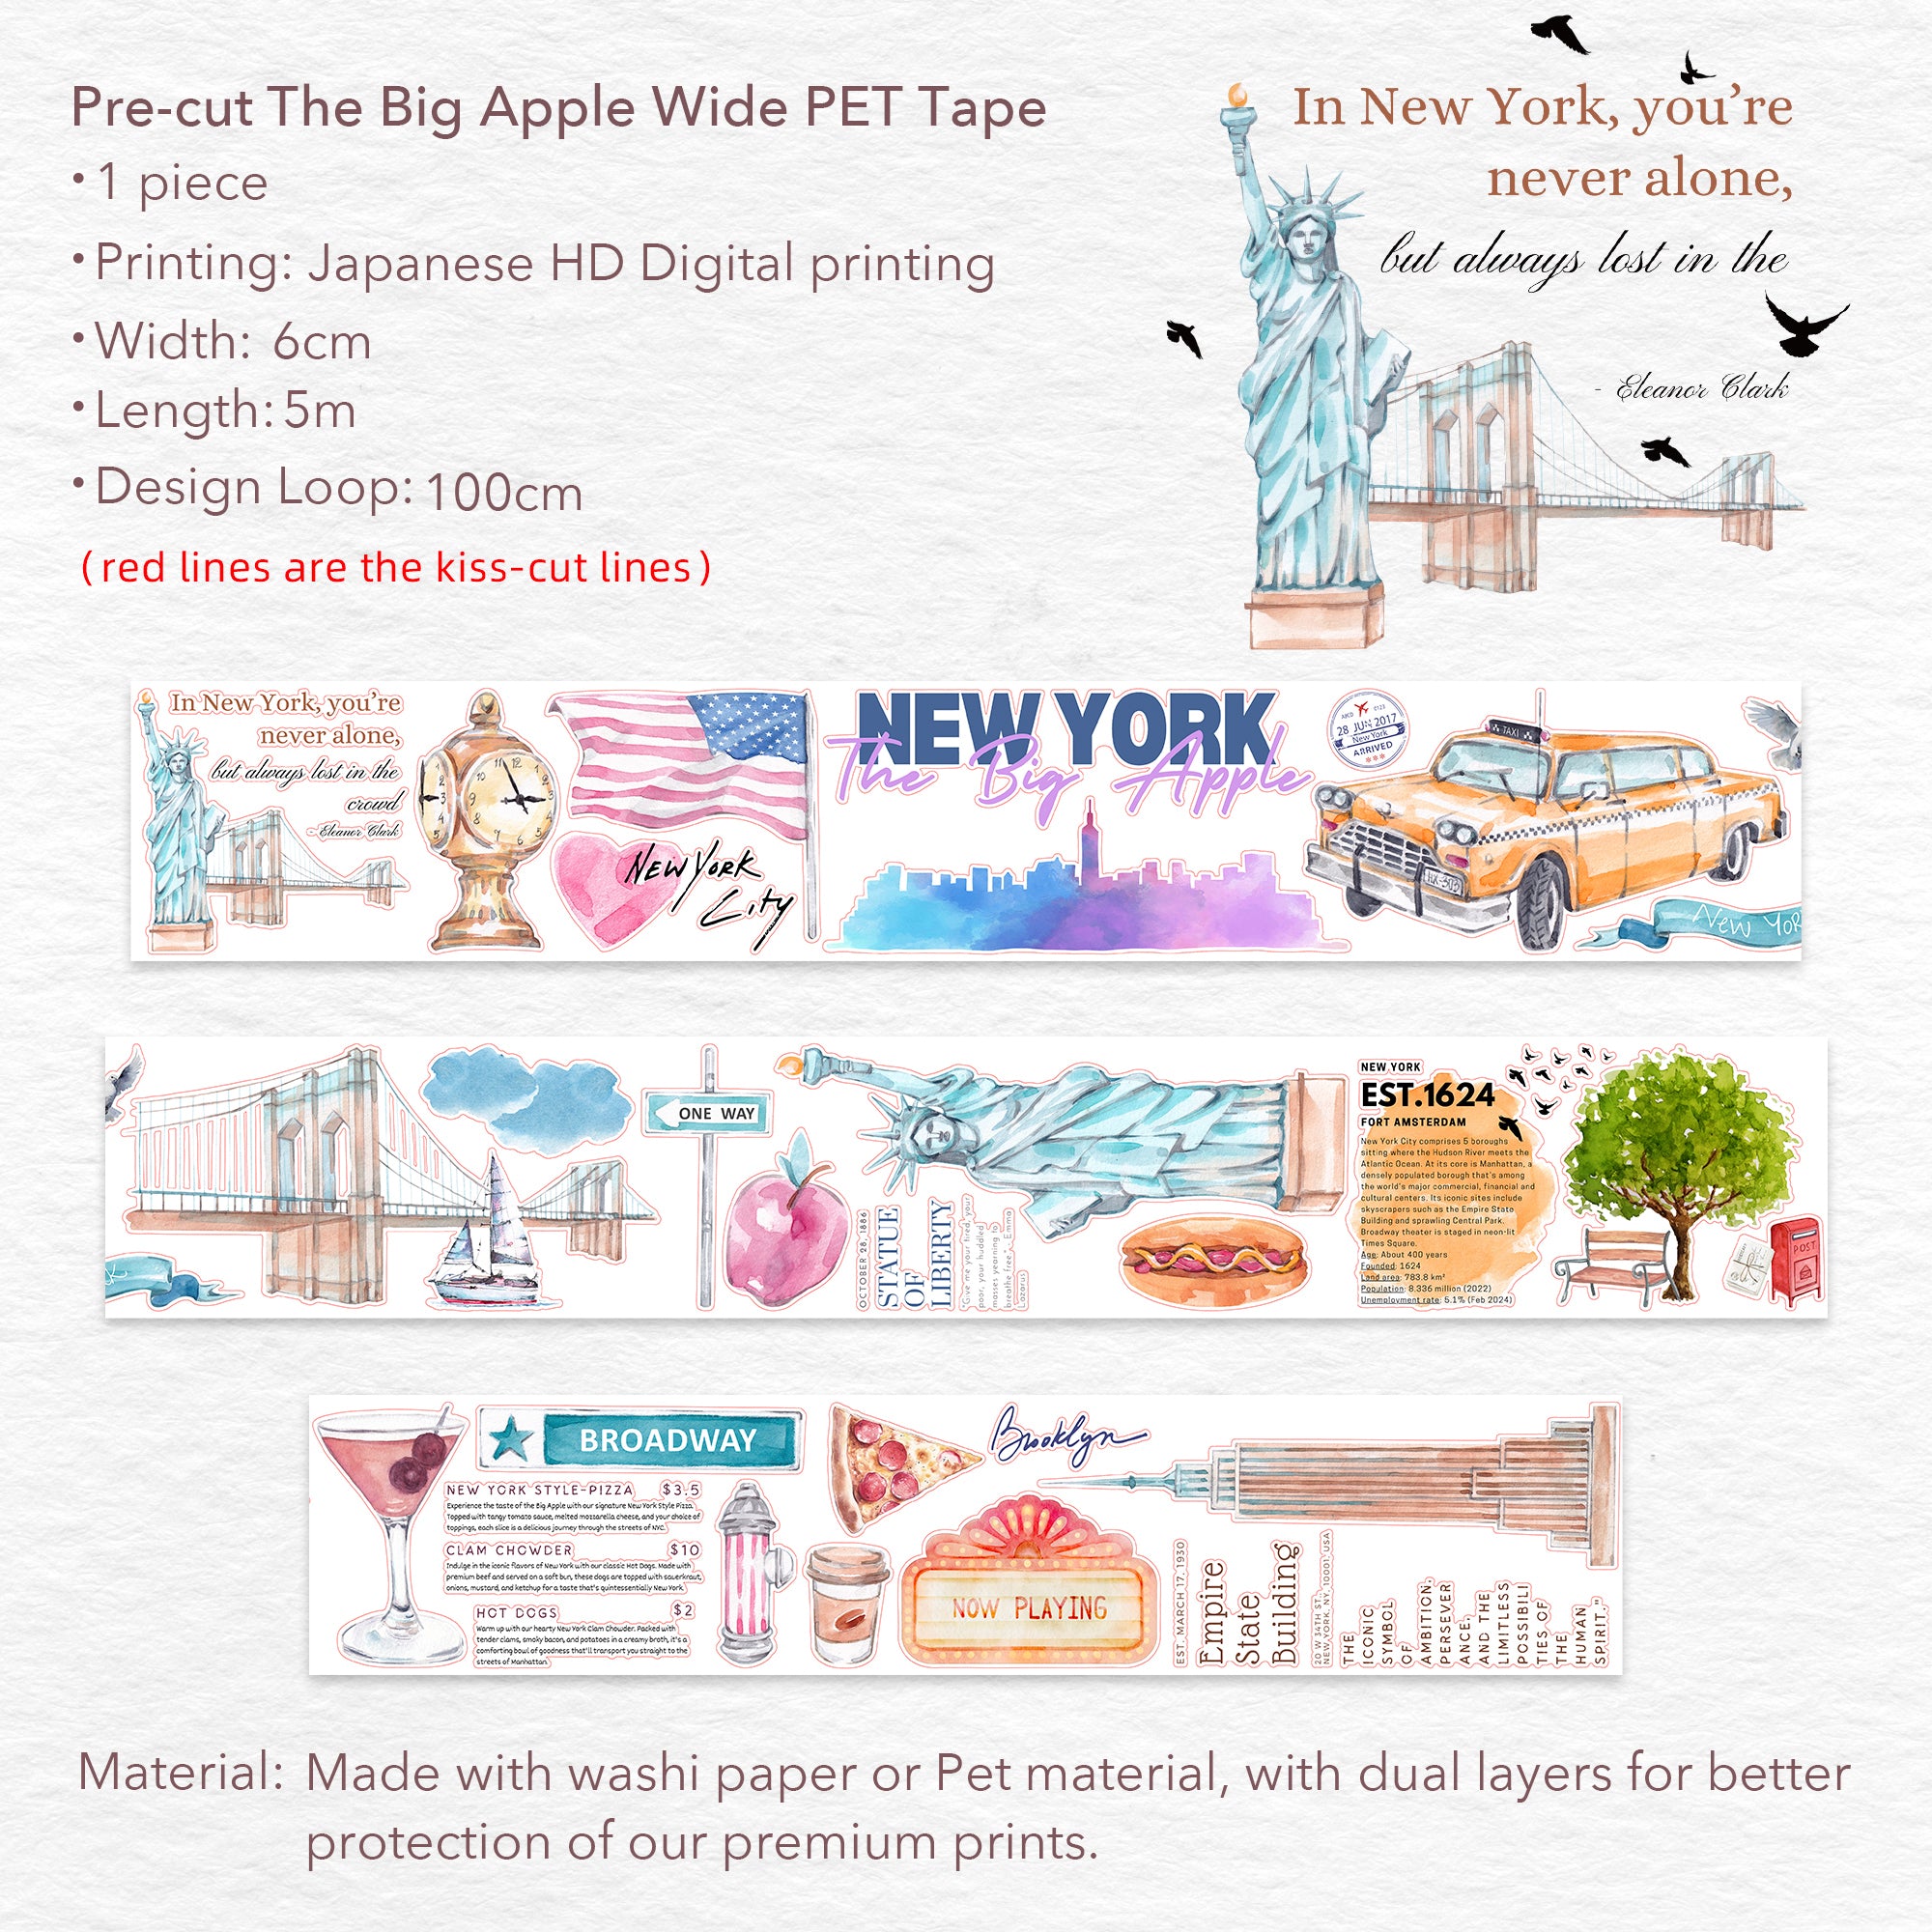 Pre-cut The Big Apple Wide Washi / PET Tape